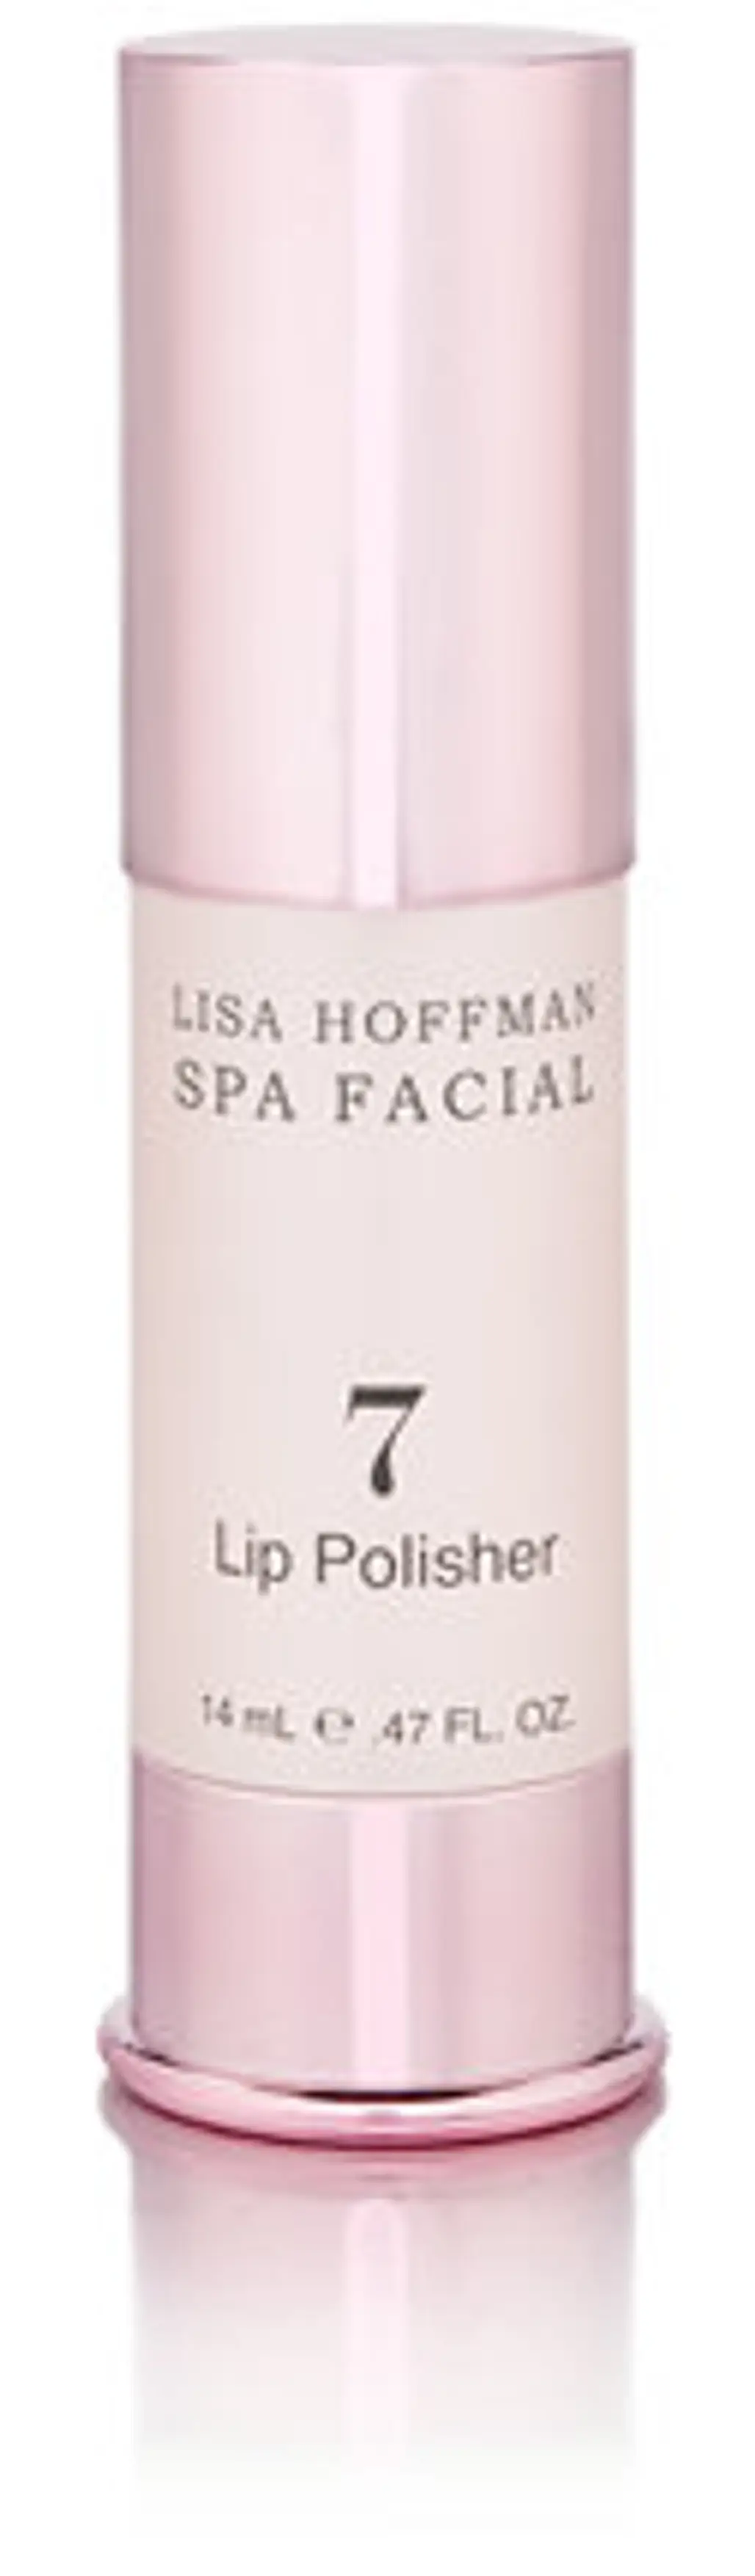 Lisa Hoffman Lip Polisher, $46 (lisahoffman.com)